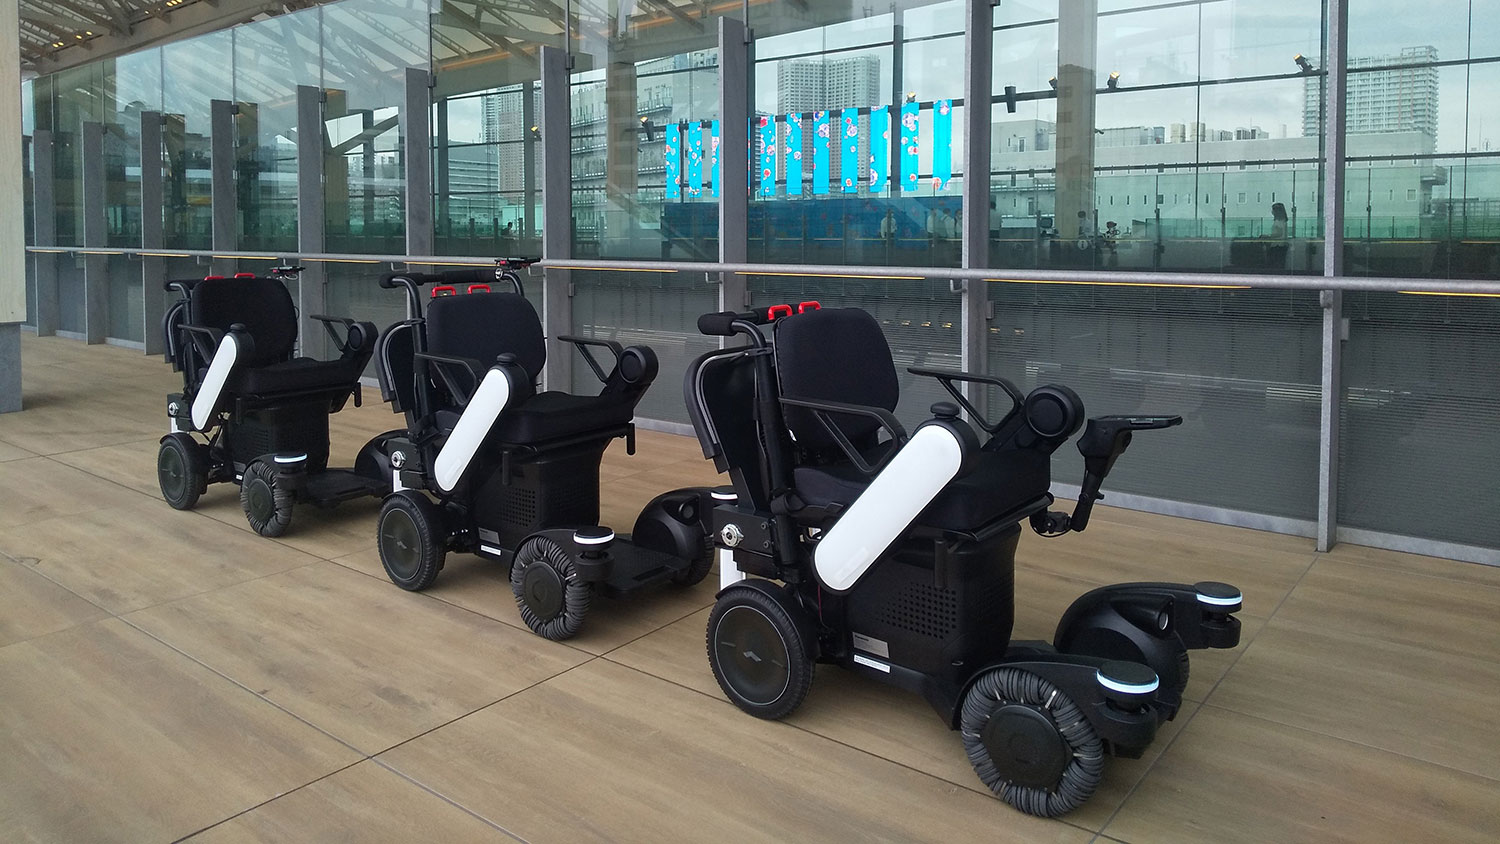 Panasonic trials its robotic mobility service at Tokyo railway station.